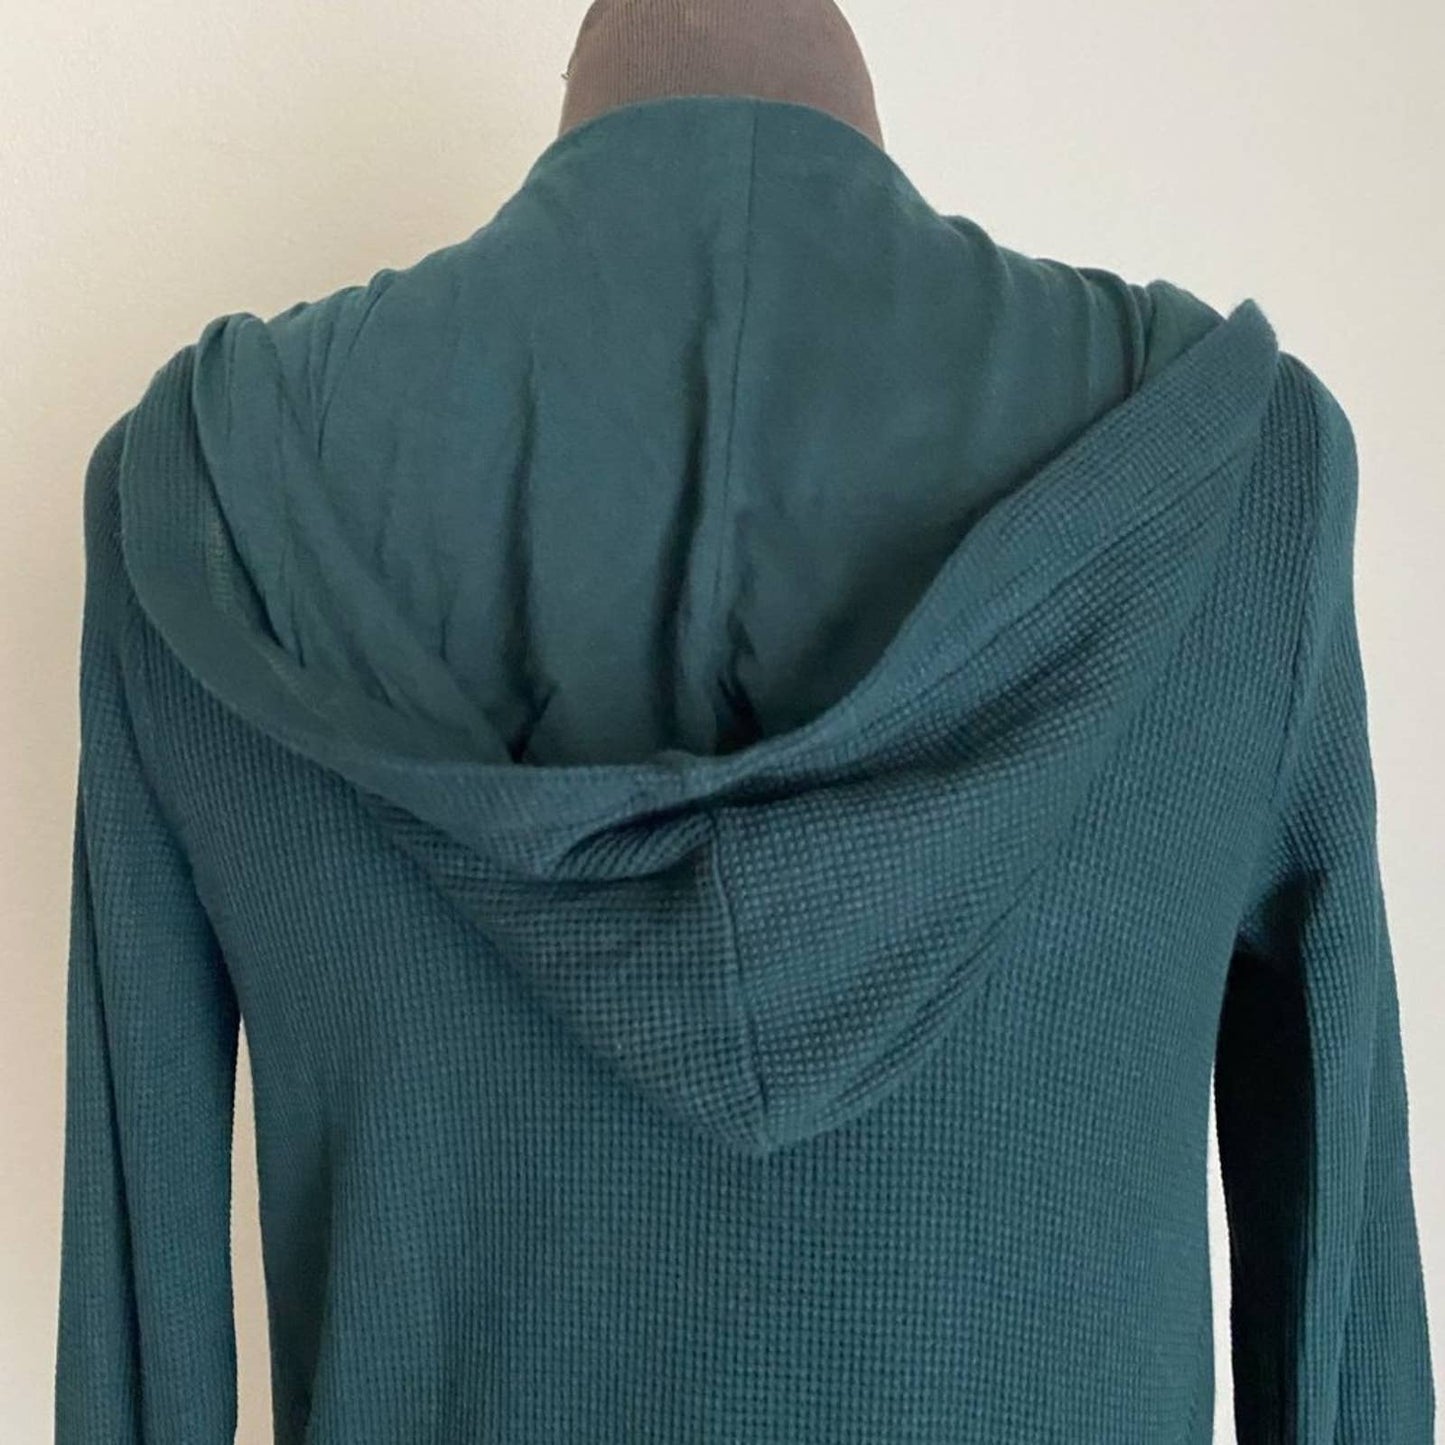 Anthropologie Splendid sz XS Cotton open cardigan hooded sweater NWT